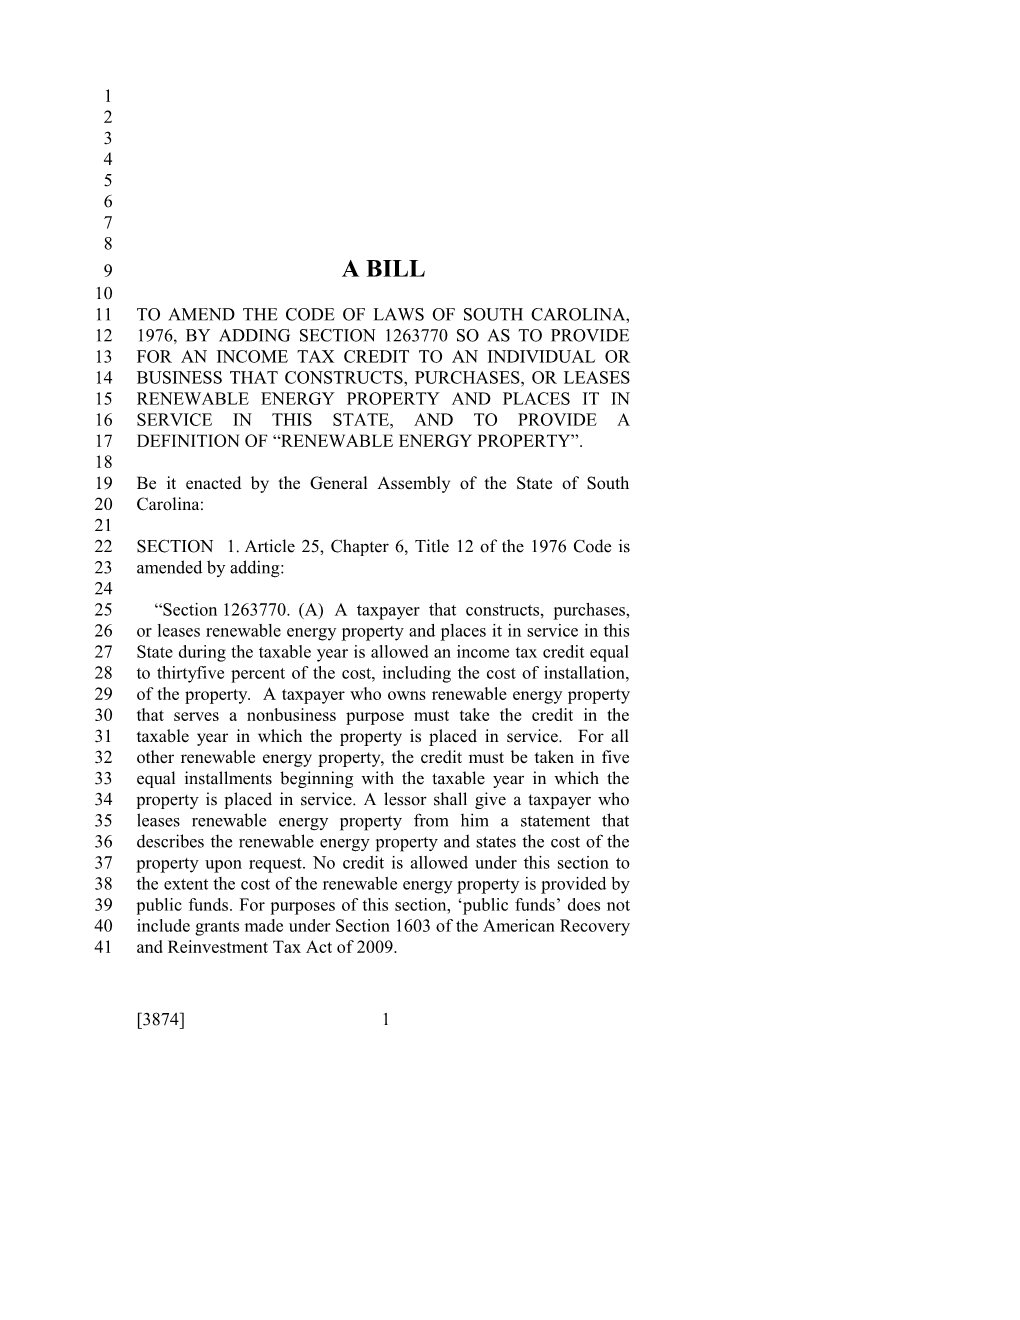 2015-2016 Bill 3874 Text of Previous Version (Mar. 19, 2015) - South Carolina Legislature Online